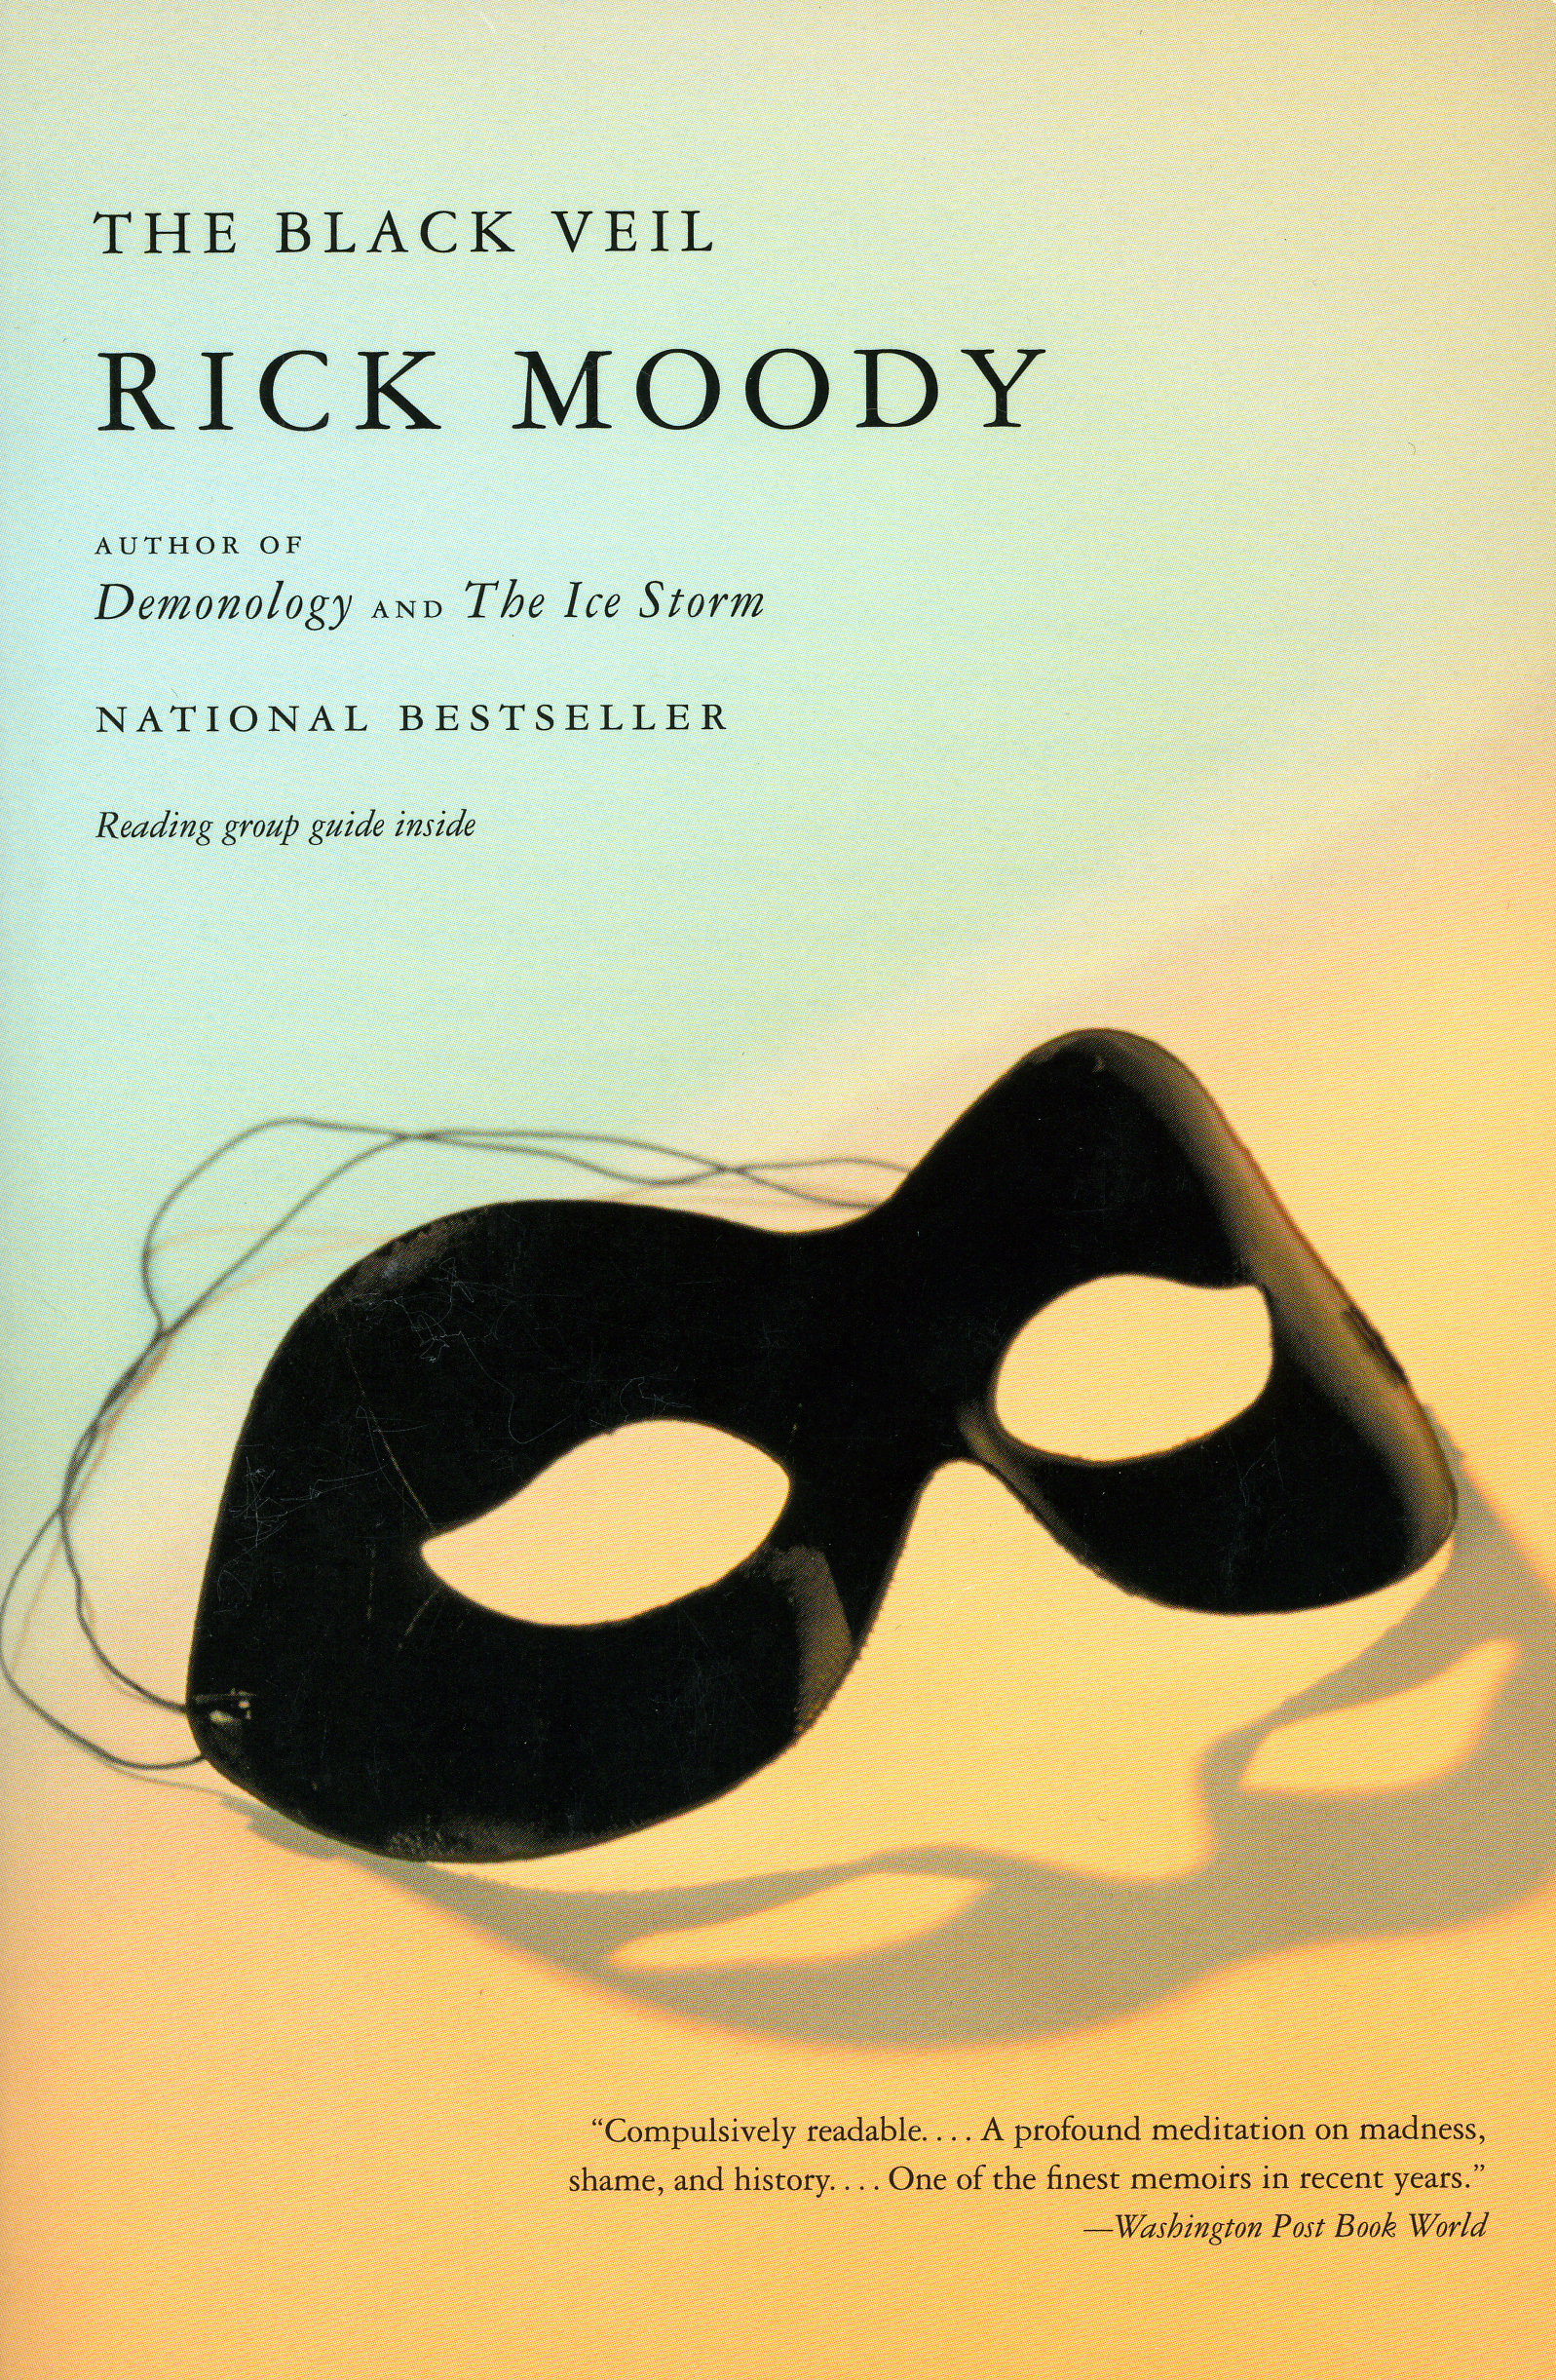 The Black Veil by Rick Moody